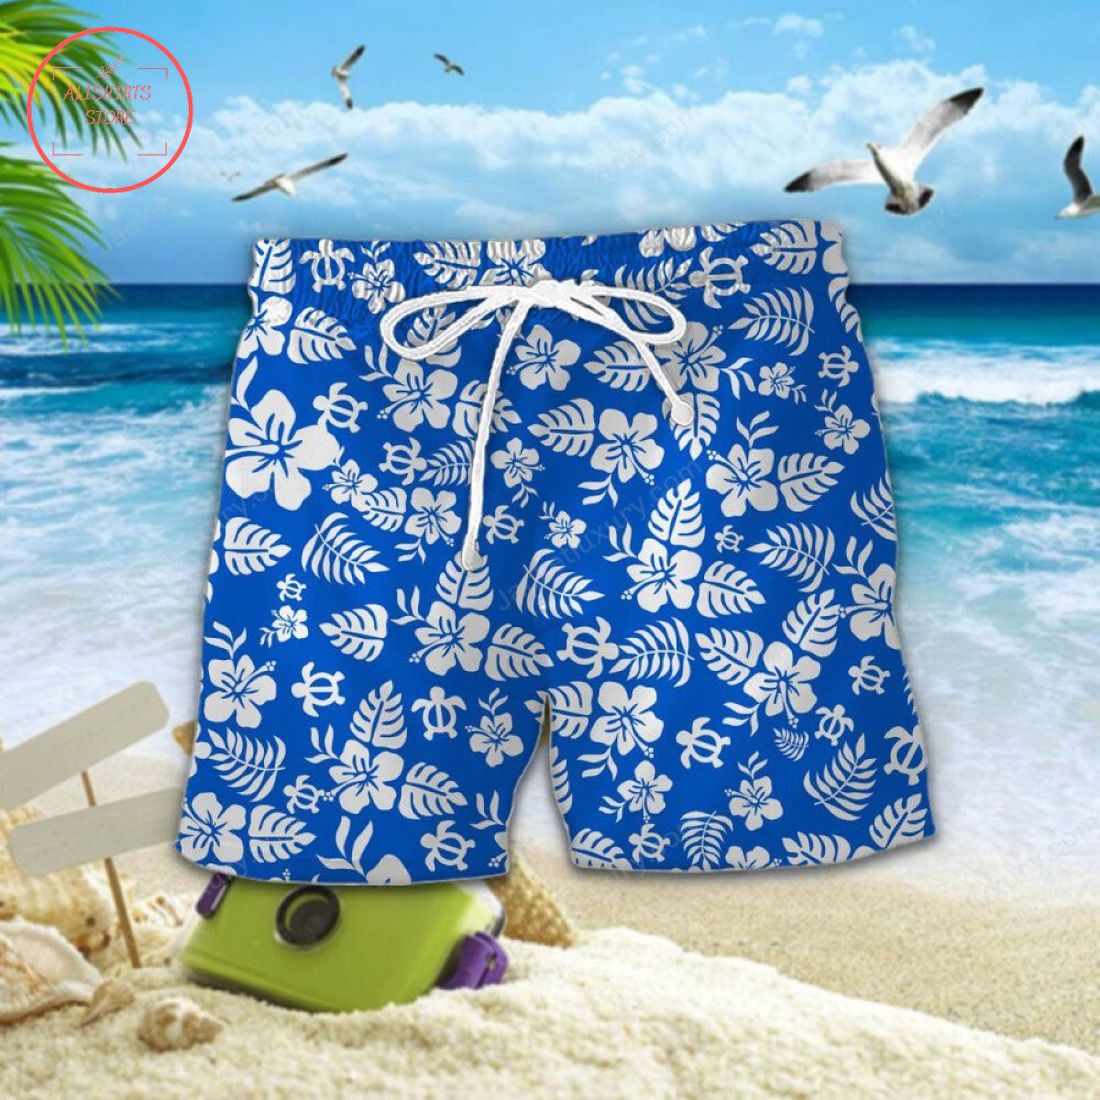 Blackburn Rovers Aloha Hawaiian Shirt and Beach Shorts